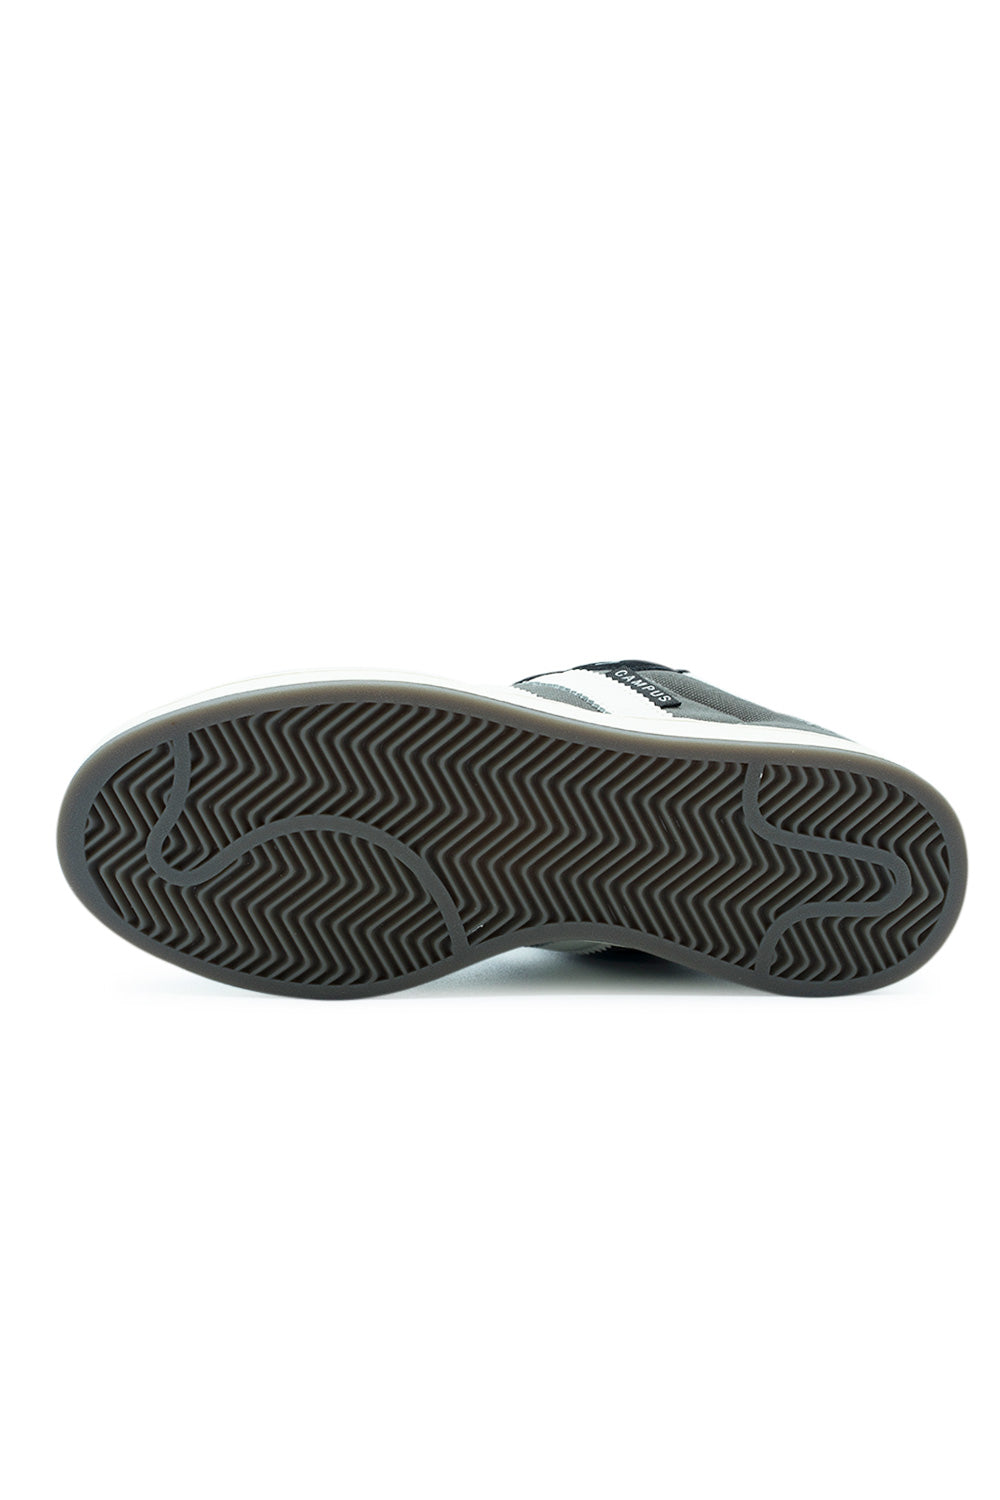 Adidas Campus 00s Shoe Charcoal / Core White / Core Black - BONKERS